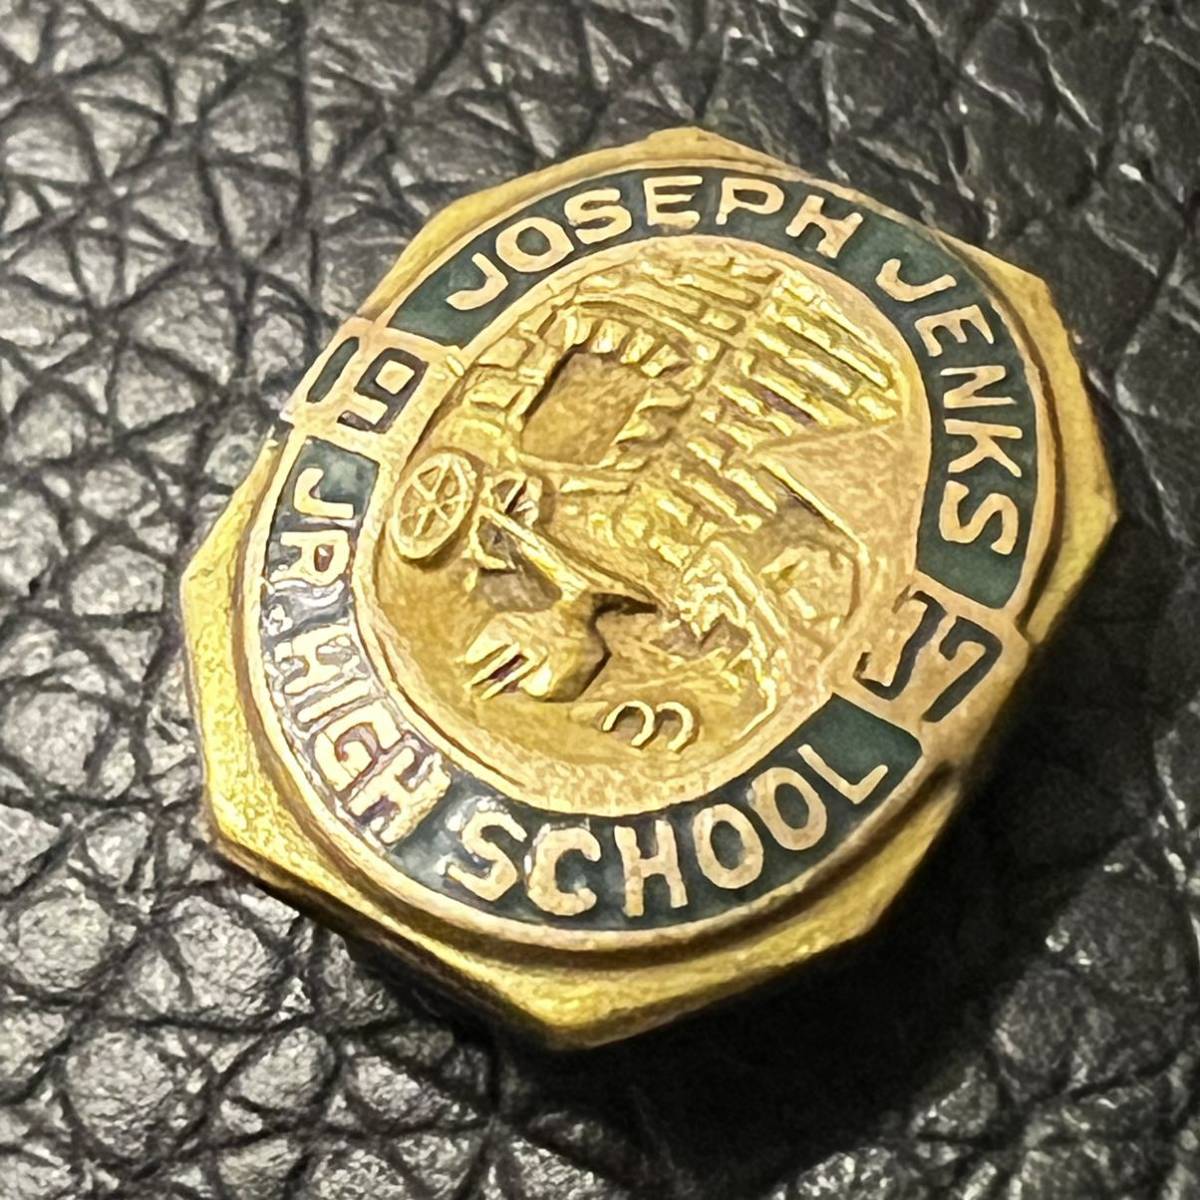  school college ring university emblem company chapter pin z40s badge /baji copper Vintage charm 50s brass antique memory pendant head order high school 37 year 